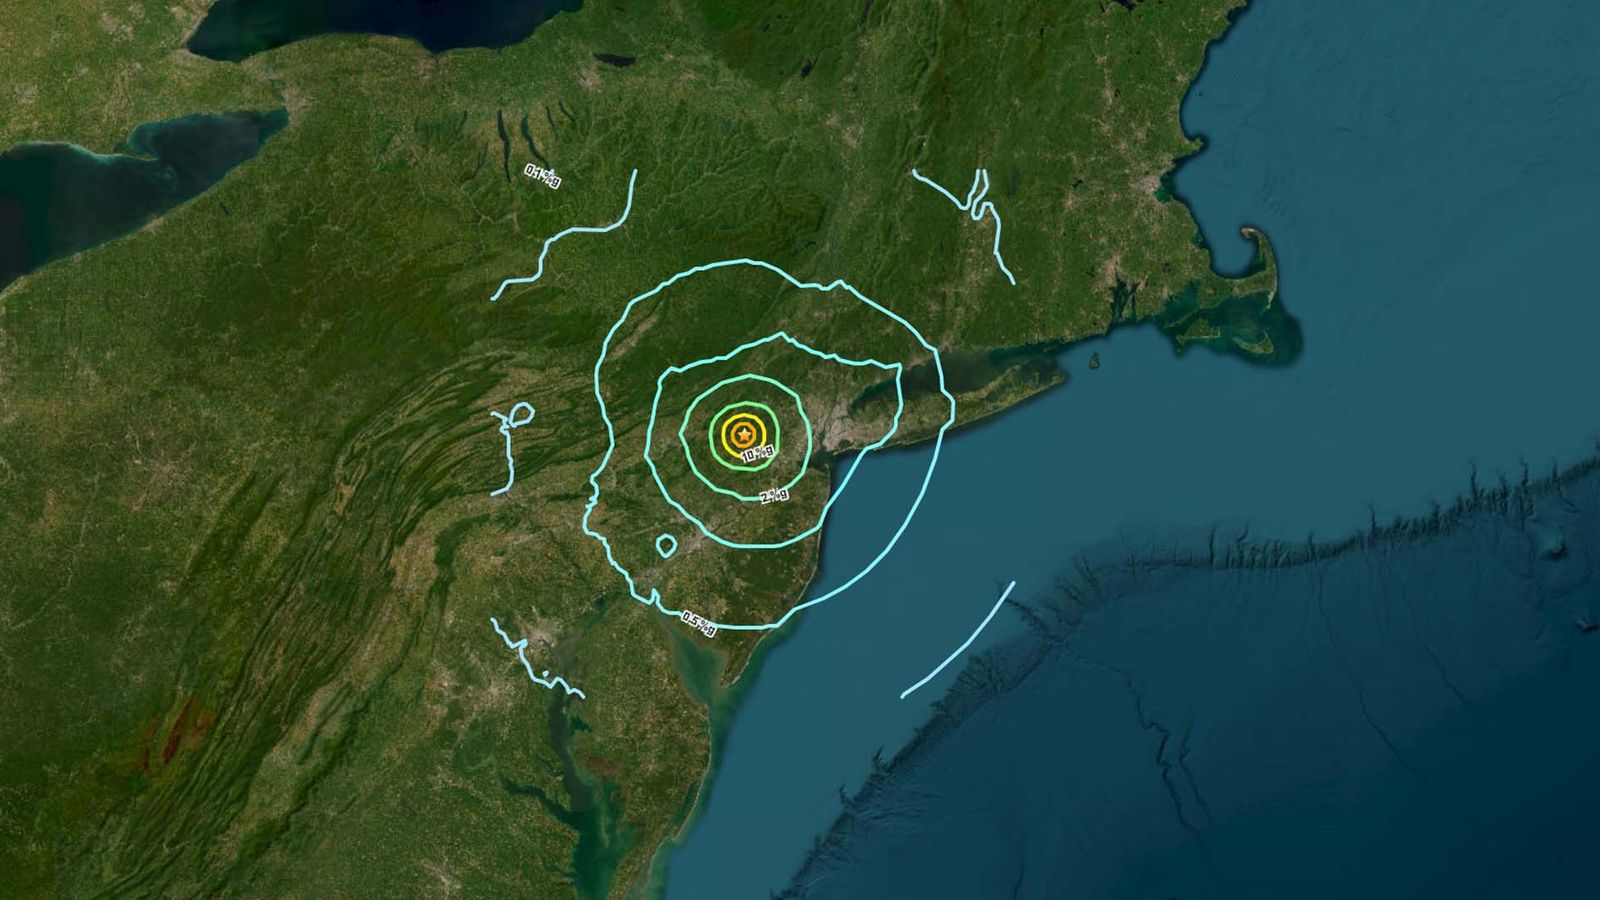 Earthquake hits US east coast - shaking buildings in New York